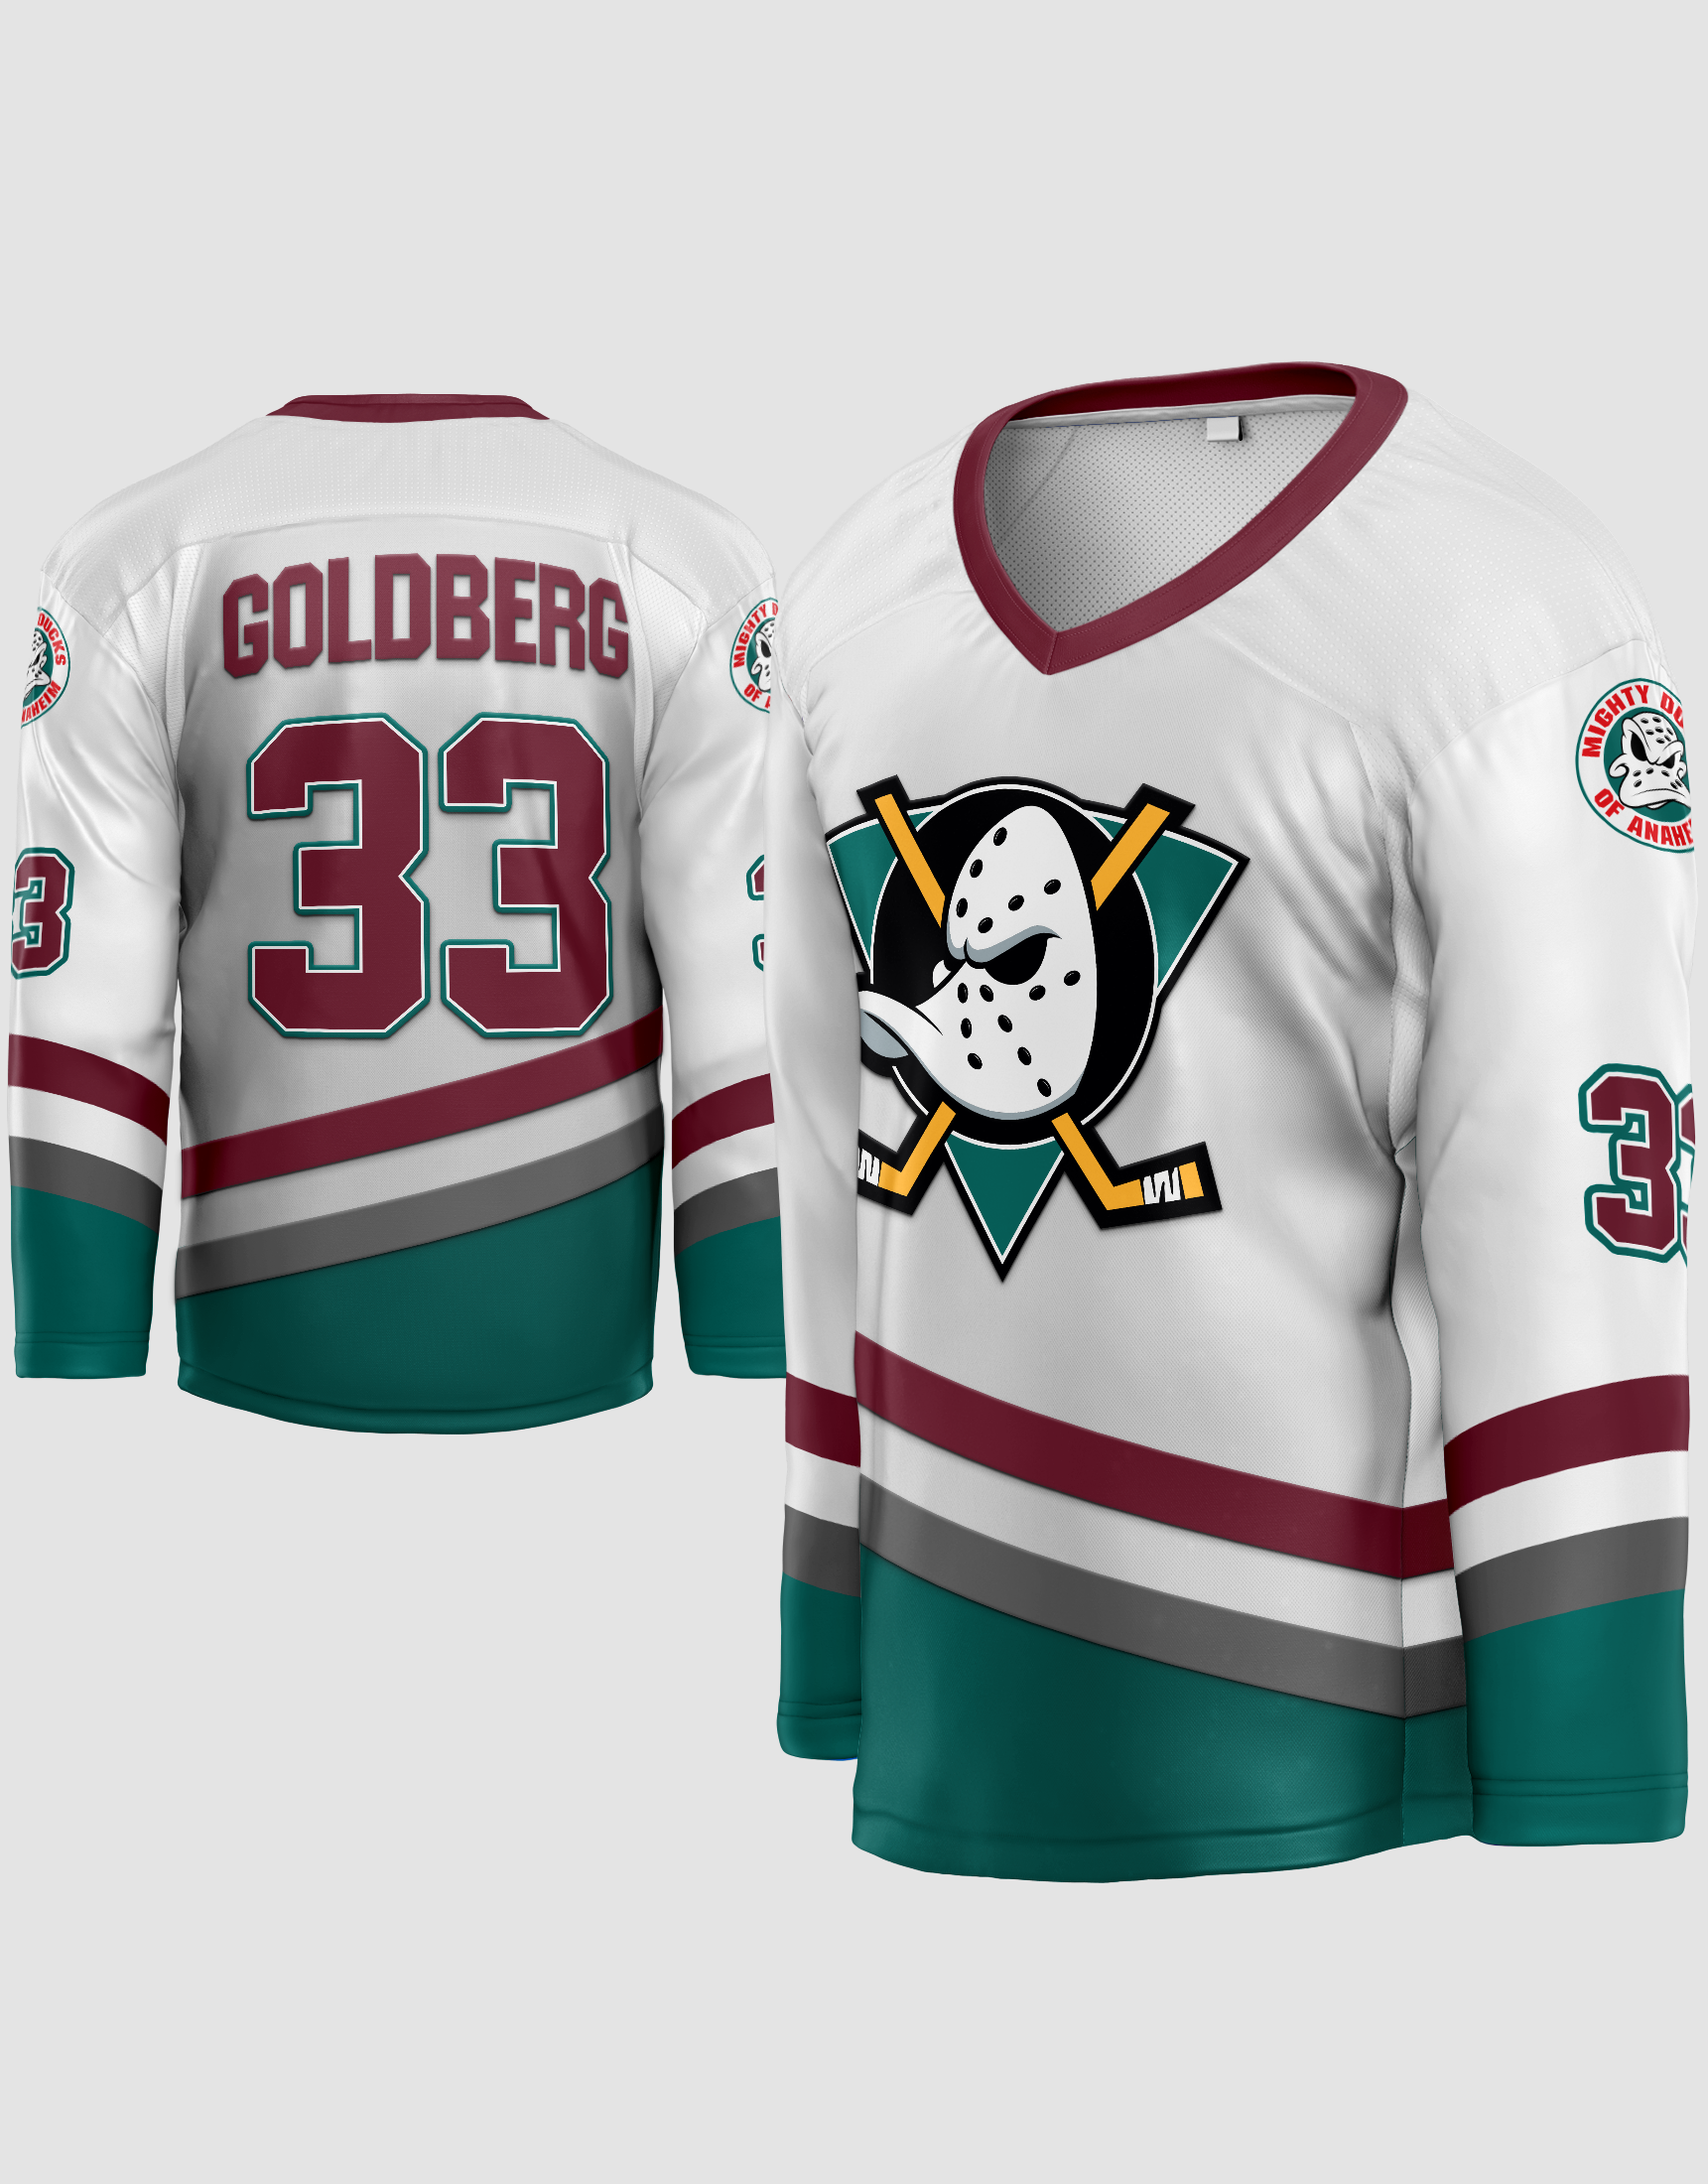 Greg Goldberg Mighty Ducks #33 Progression of Classics Hockey black t shirt  sz L